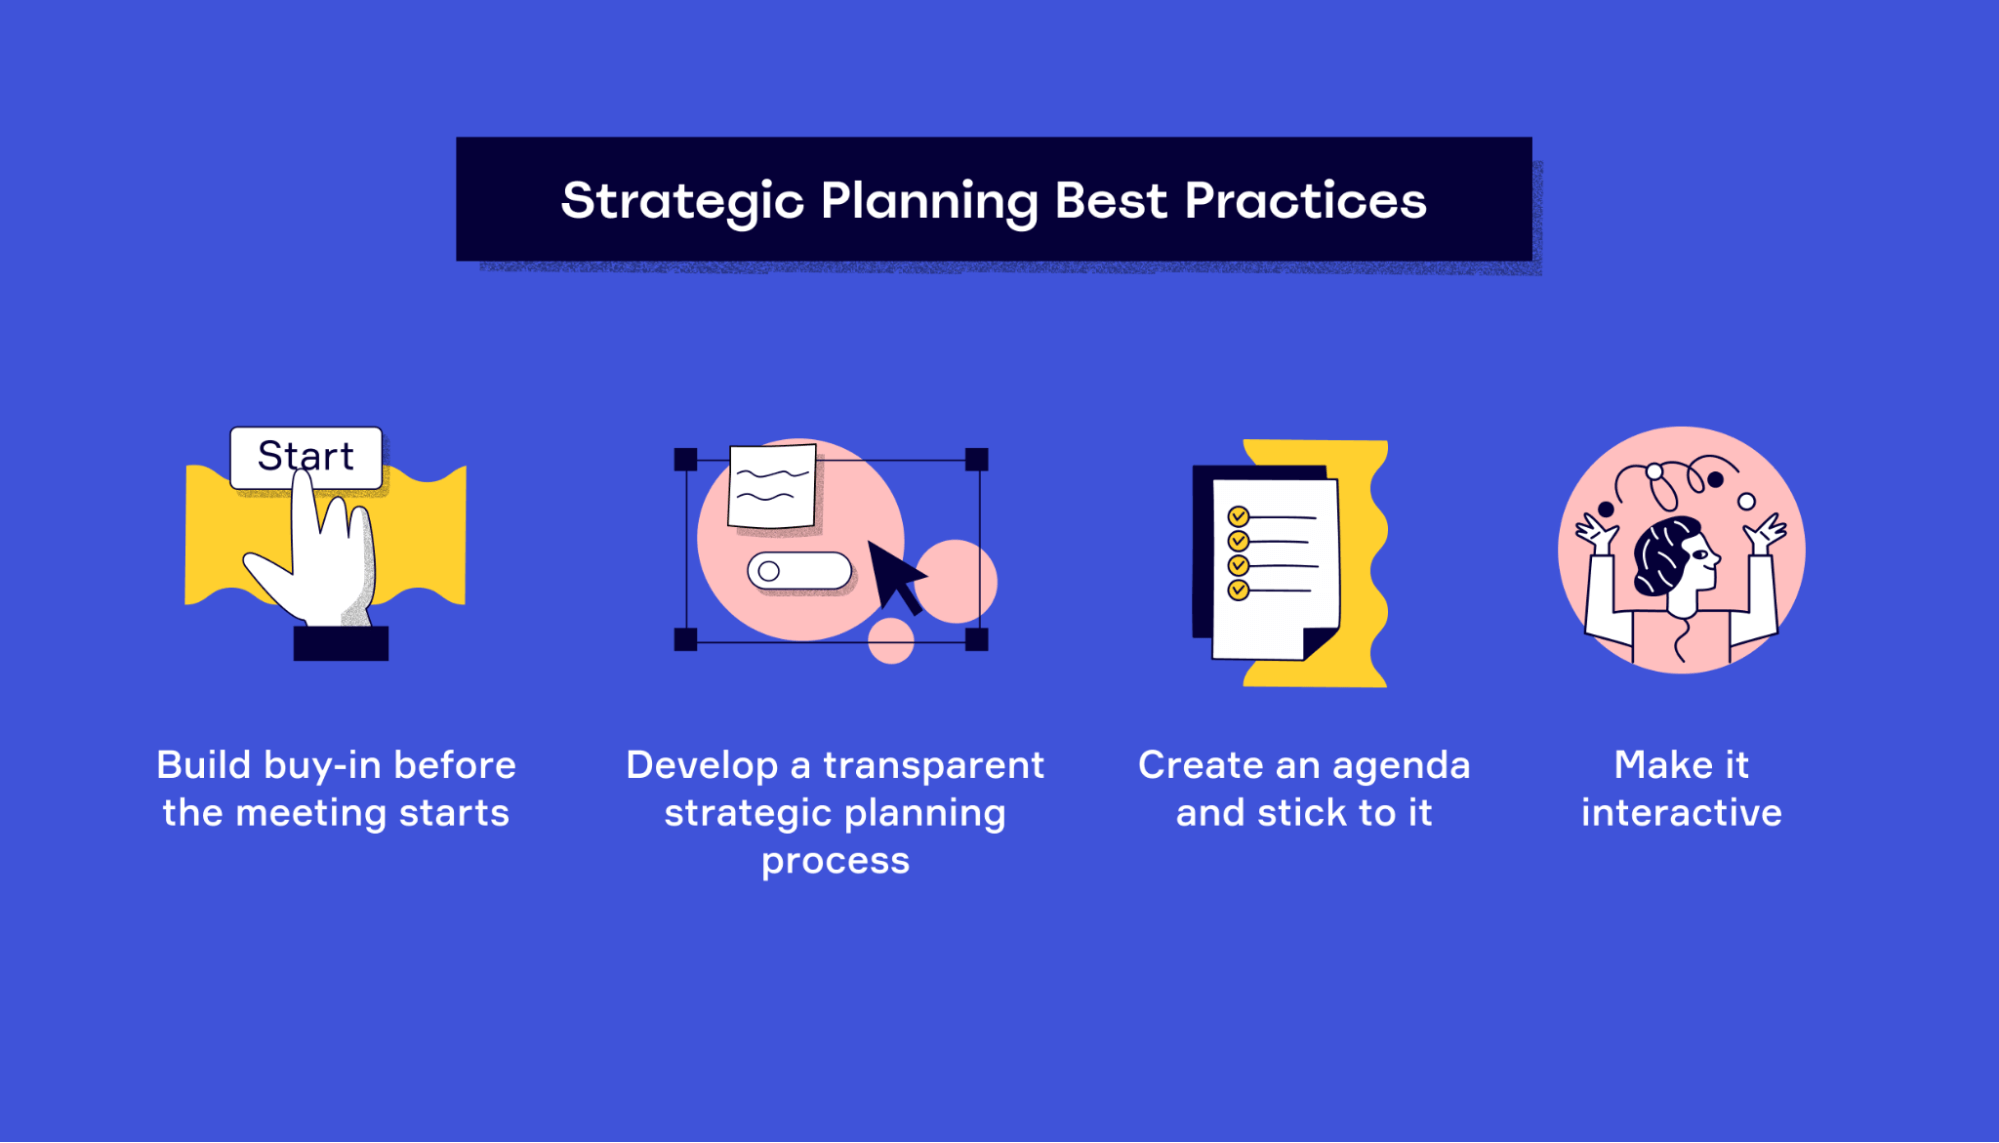 Strategic planning best practices